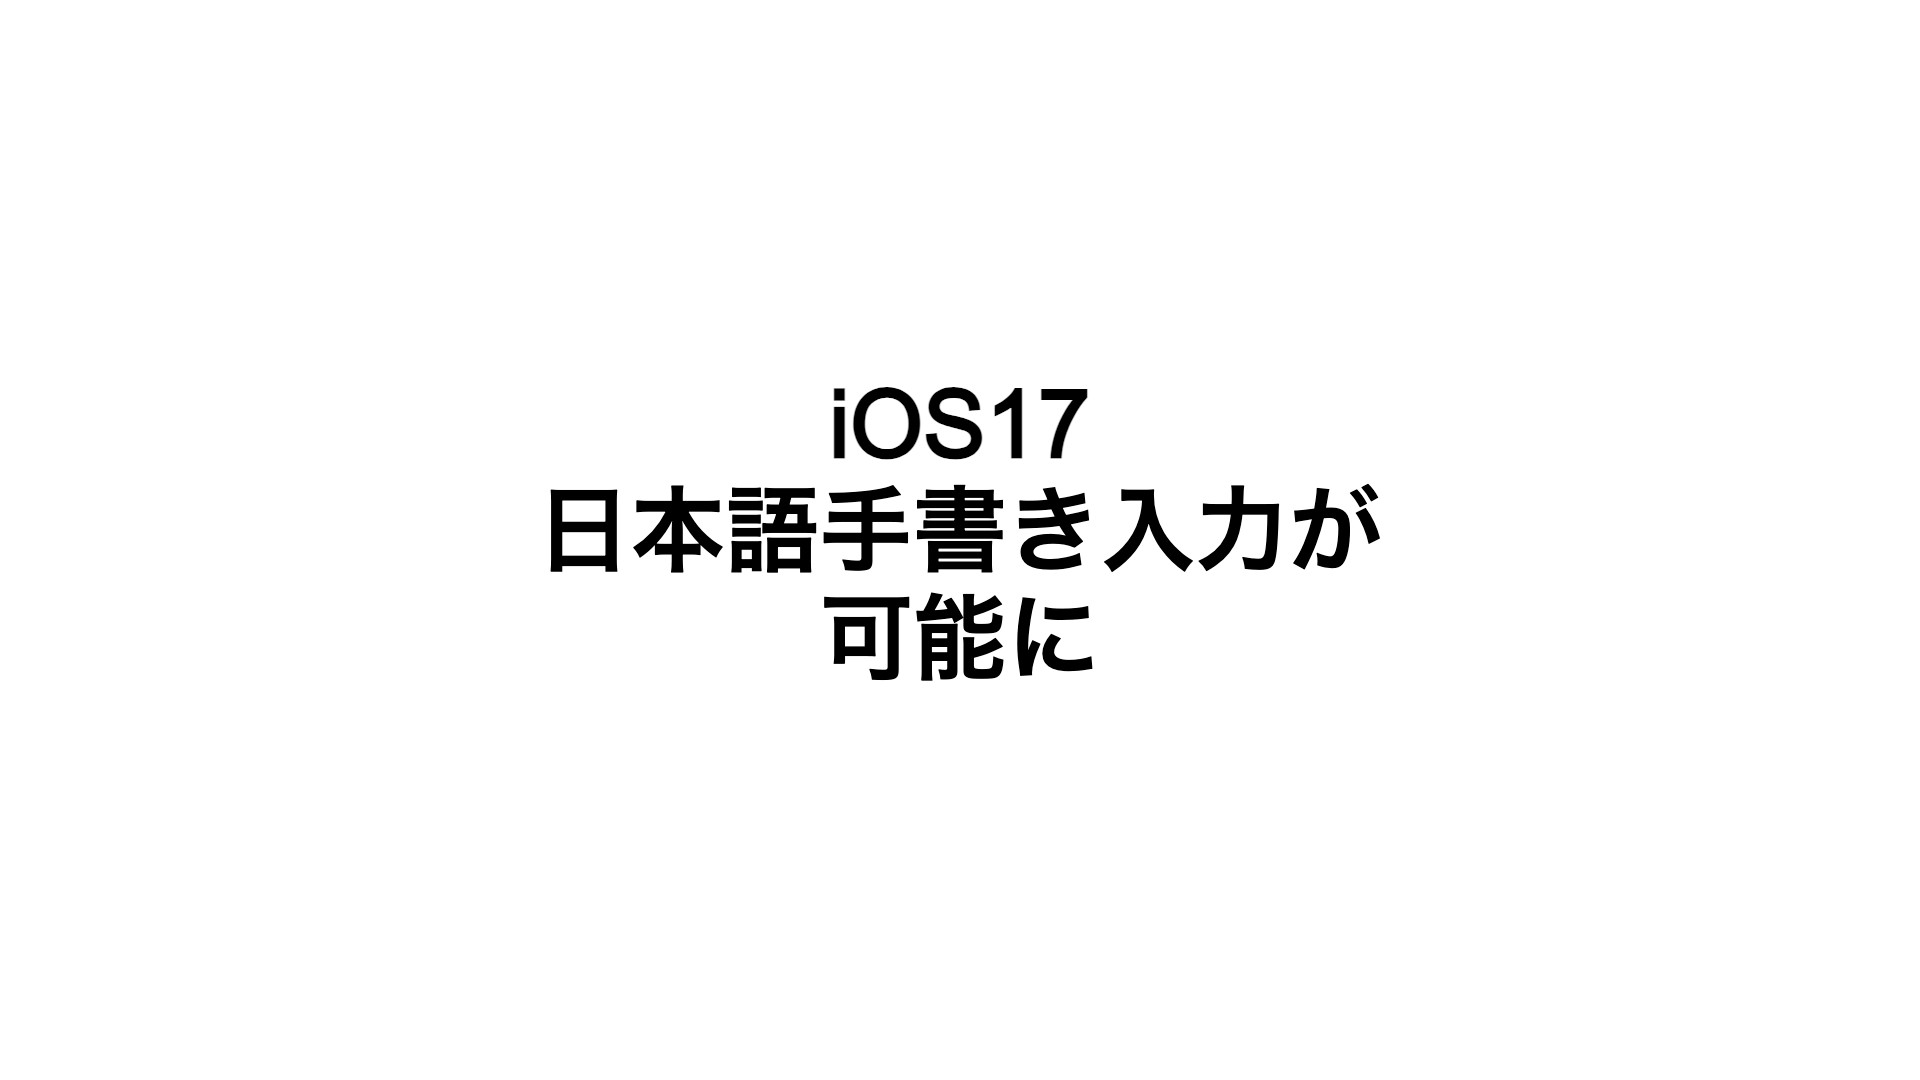 iOS17/iPadOS 17では日本語の手書きキーボードが追加